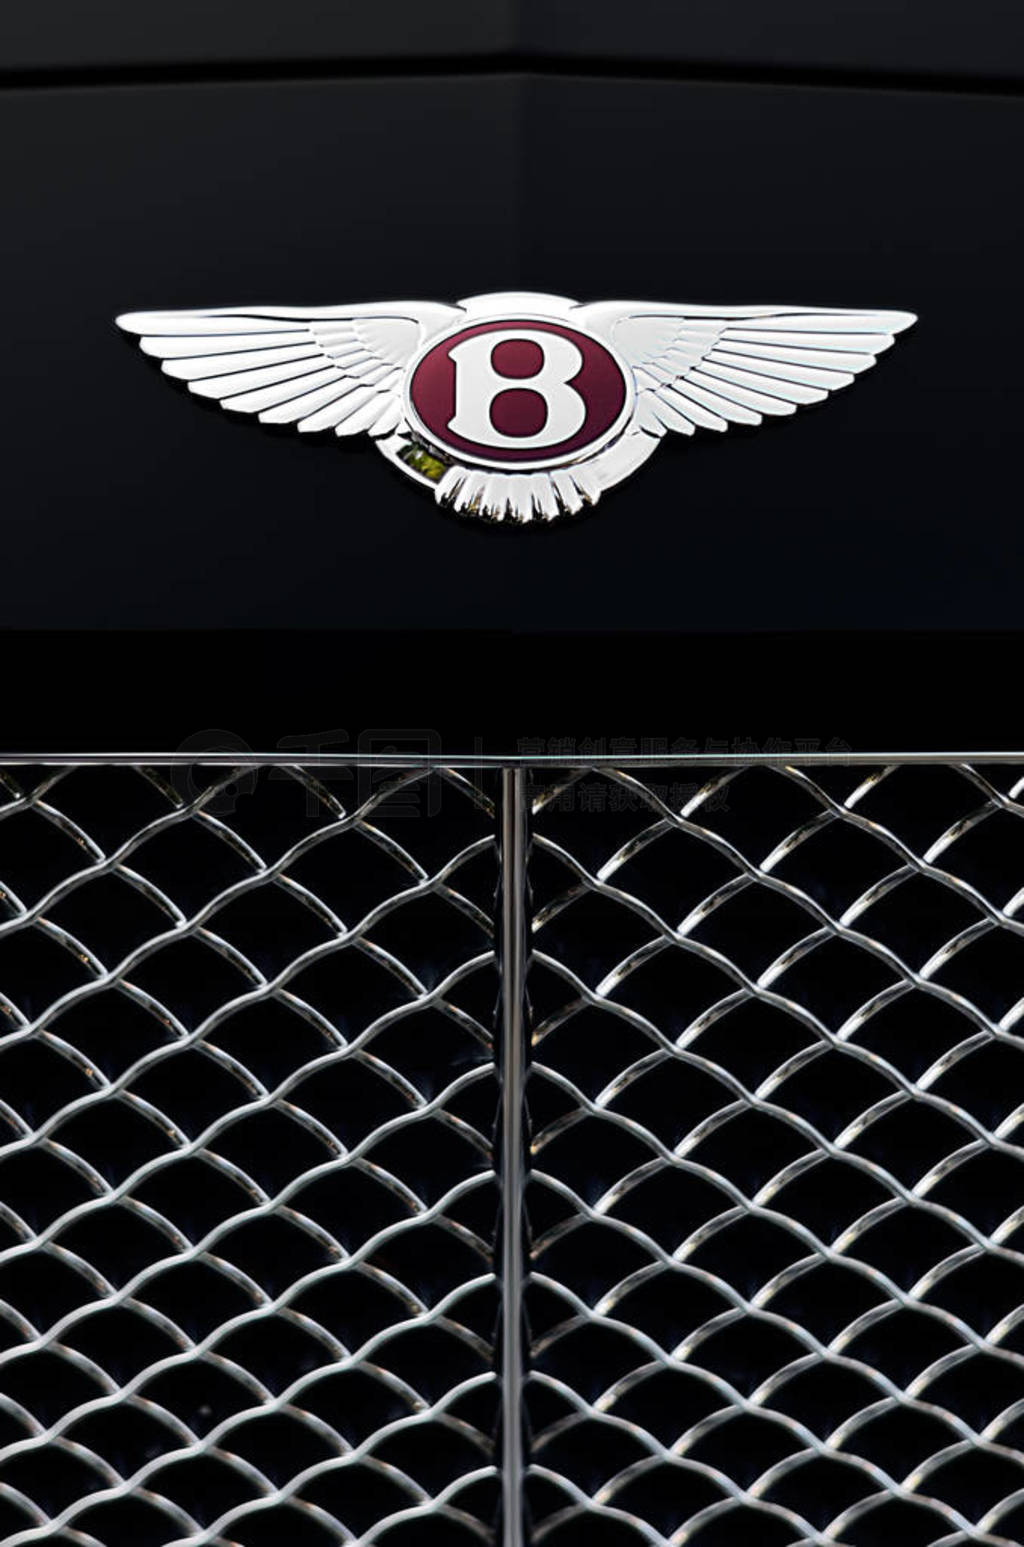 Emblem on Bentley car